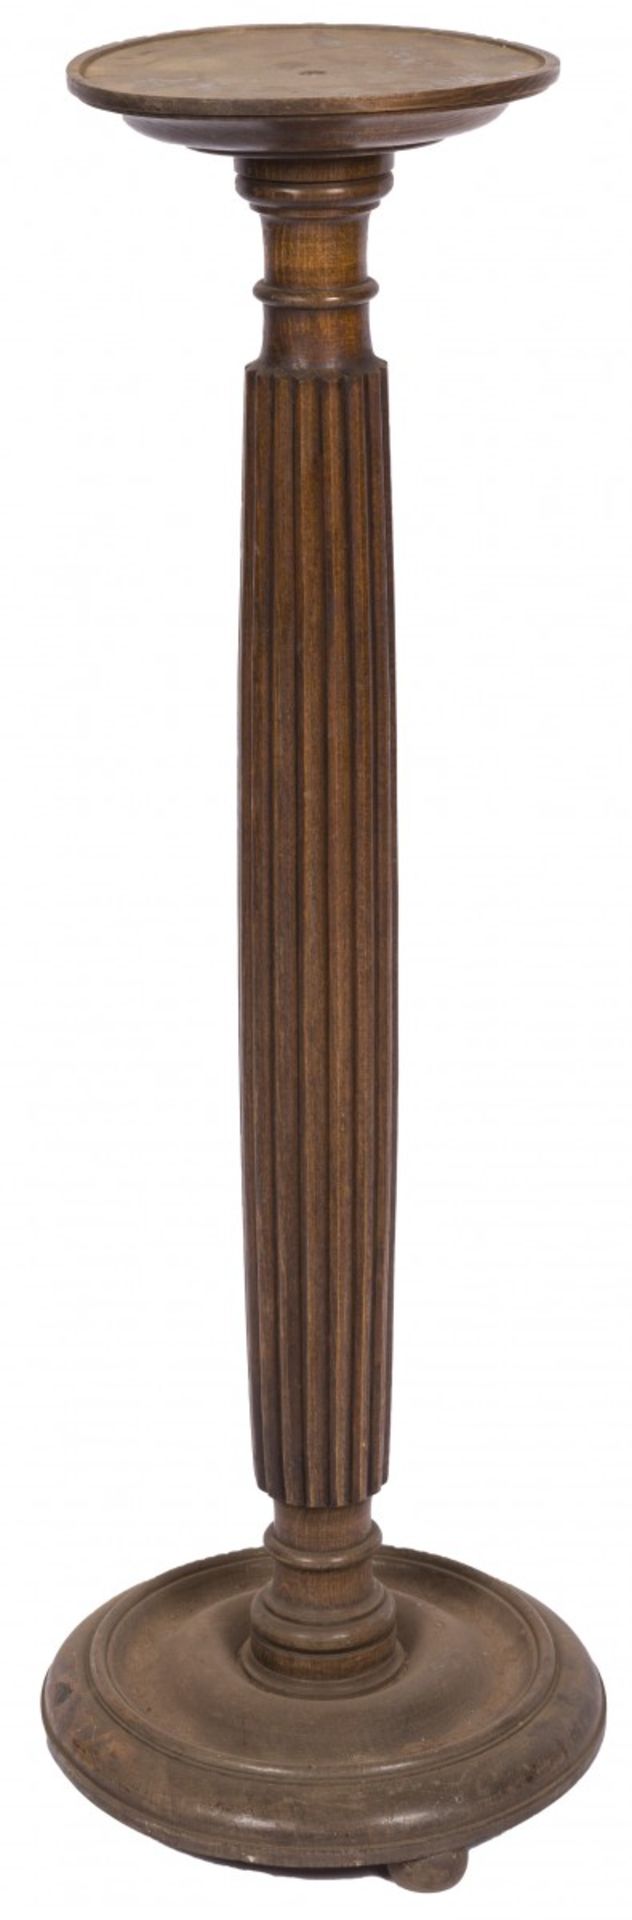 A mahogany pedestal, Dutch, early 20th century.